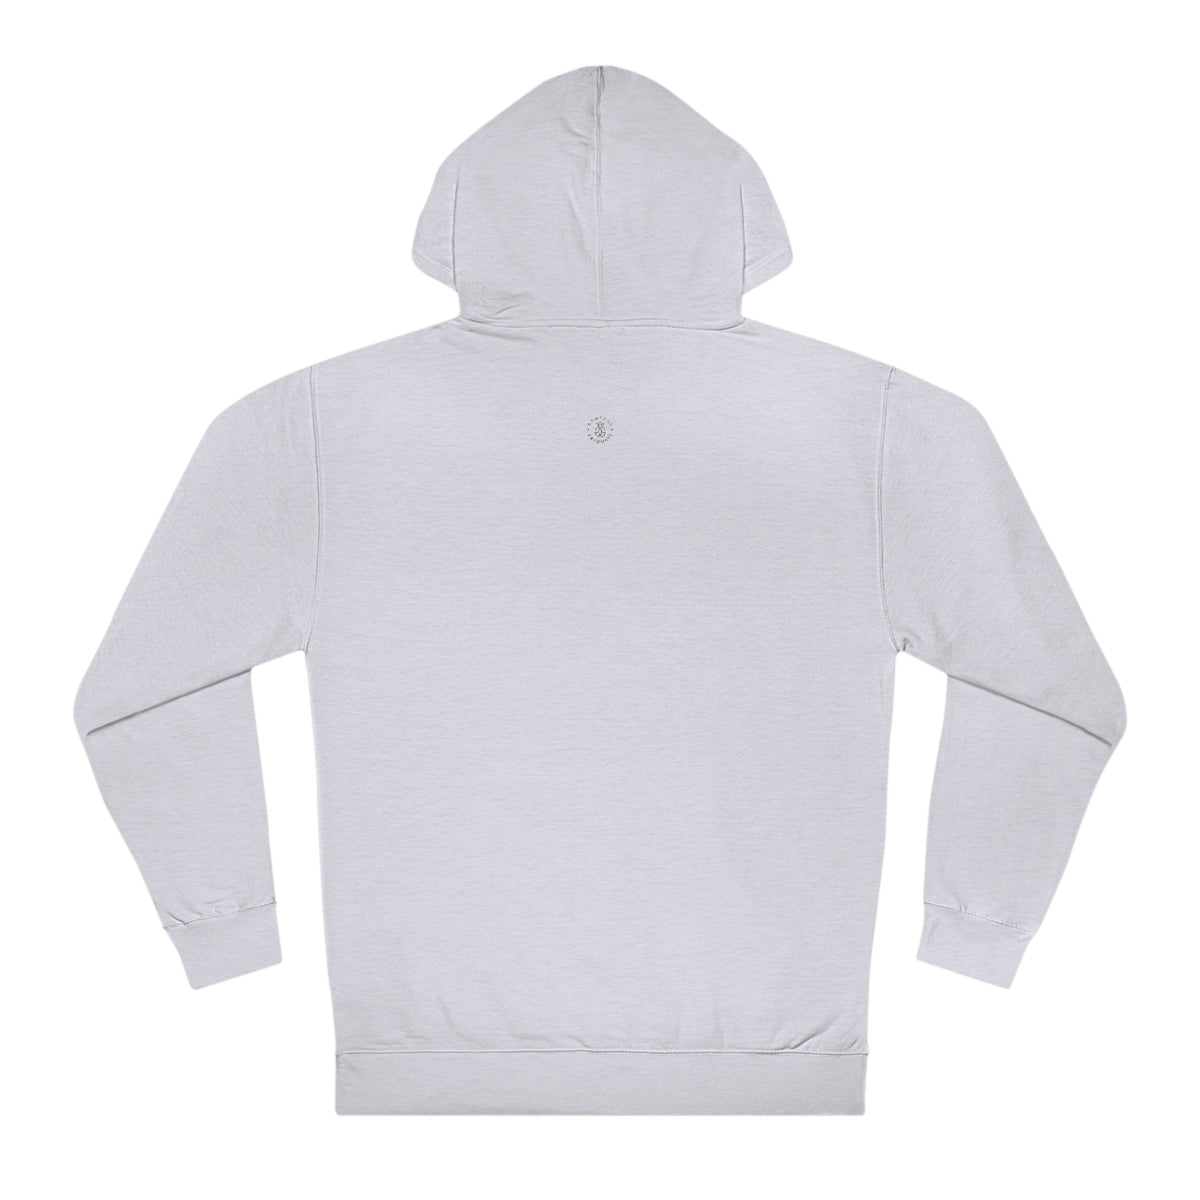 Arkansas Hooded Sweatshirt - GG - ITC